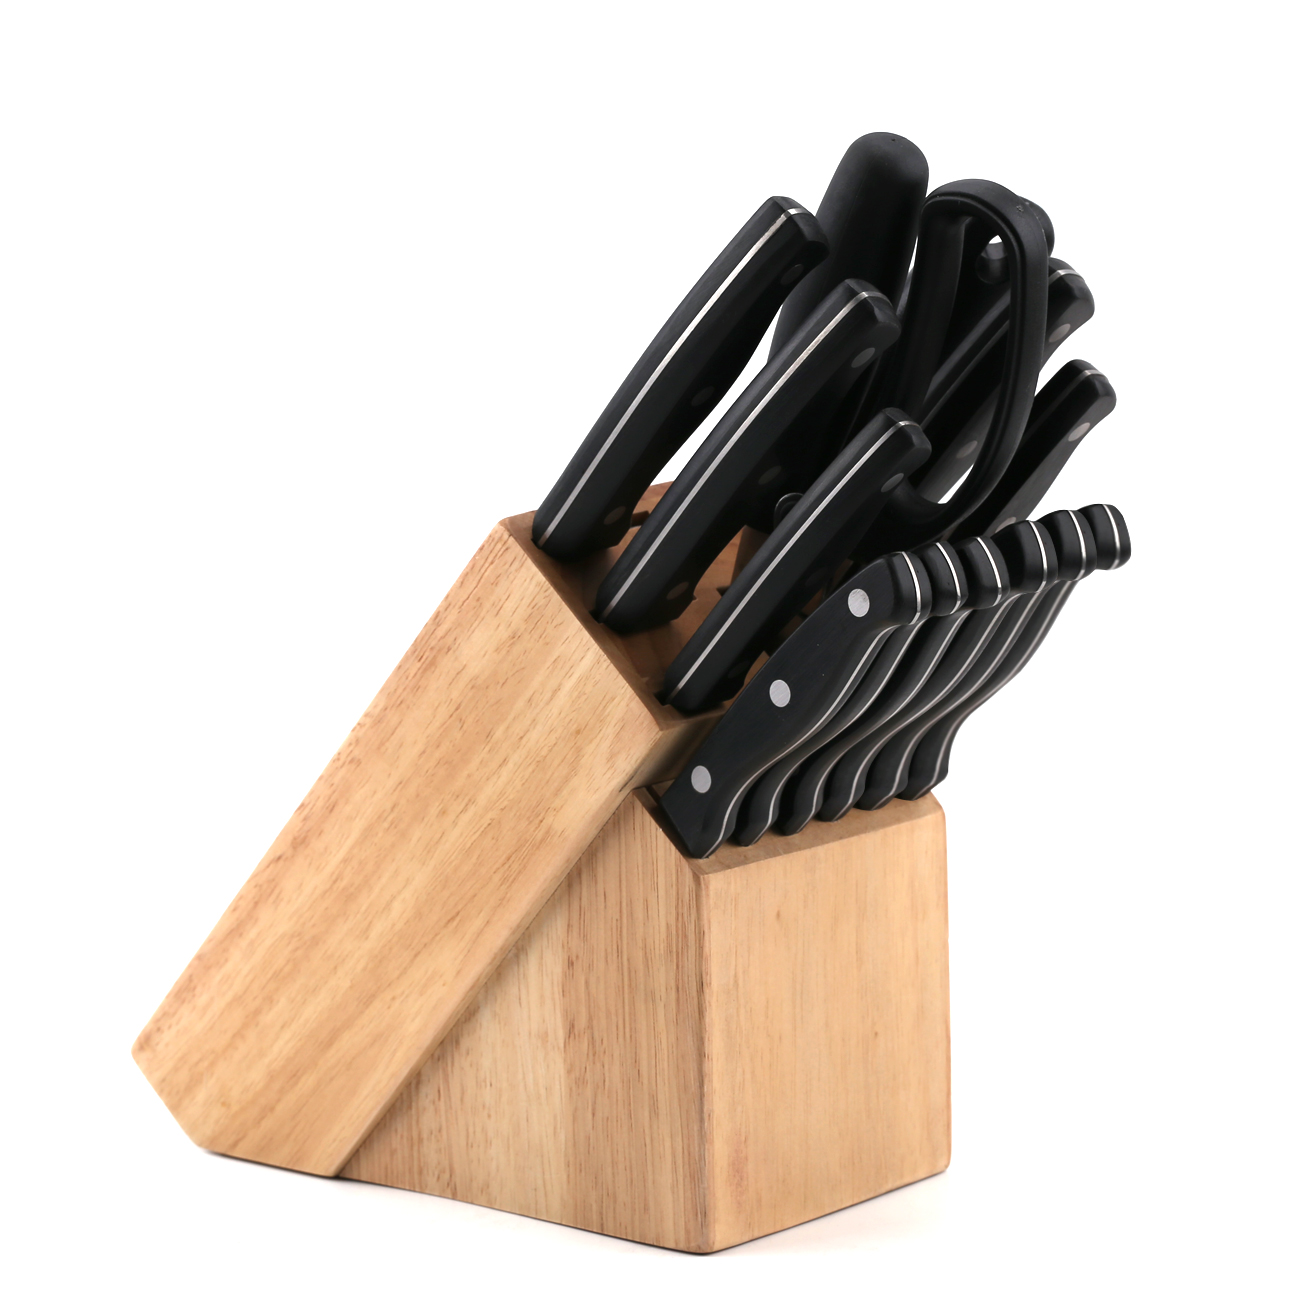 J104-14-Piece Conjunto de Blocos de Facas de Cozinha Premium, Aço Inoxidável de Alto Carbono-ZX | faca de cozinha, utensílios de cozinha, molde de bolo de silicone, tábua de corte, conjuntos de ferramentas de cozimento, faca de chef, faca de bife, faca fatiadora, faca utilitária, faca de descascar, bloco de facas, suporte de faca, faca Santoku, faca infantil, faca de plástico, pintura antiaderente Faca, faca colorida, faca de aço inoxidável, abridor de latas, abridor de garrafas, coador de chá, ralador, batedor de ovos, utensílio de cozinha de náilon, utensílio de cozinha de silicone, cortador de biscoitos, conjunto de facas de cozinha, apontador de facas, descascador, faca de bolo, faca de queijo, pizza Faca, espátula de silicone, colher de silicone, pinça de comida, faca forjada, tesoura de cozinha, facas para assar bolo, facas de cozinha infantis, faca de trinchar